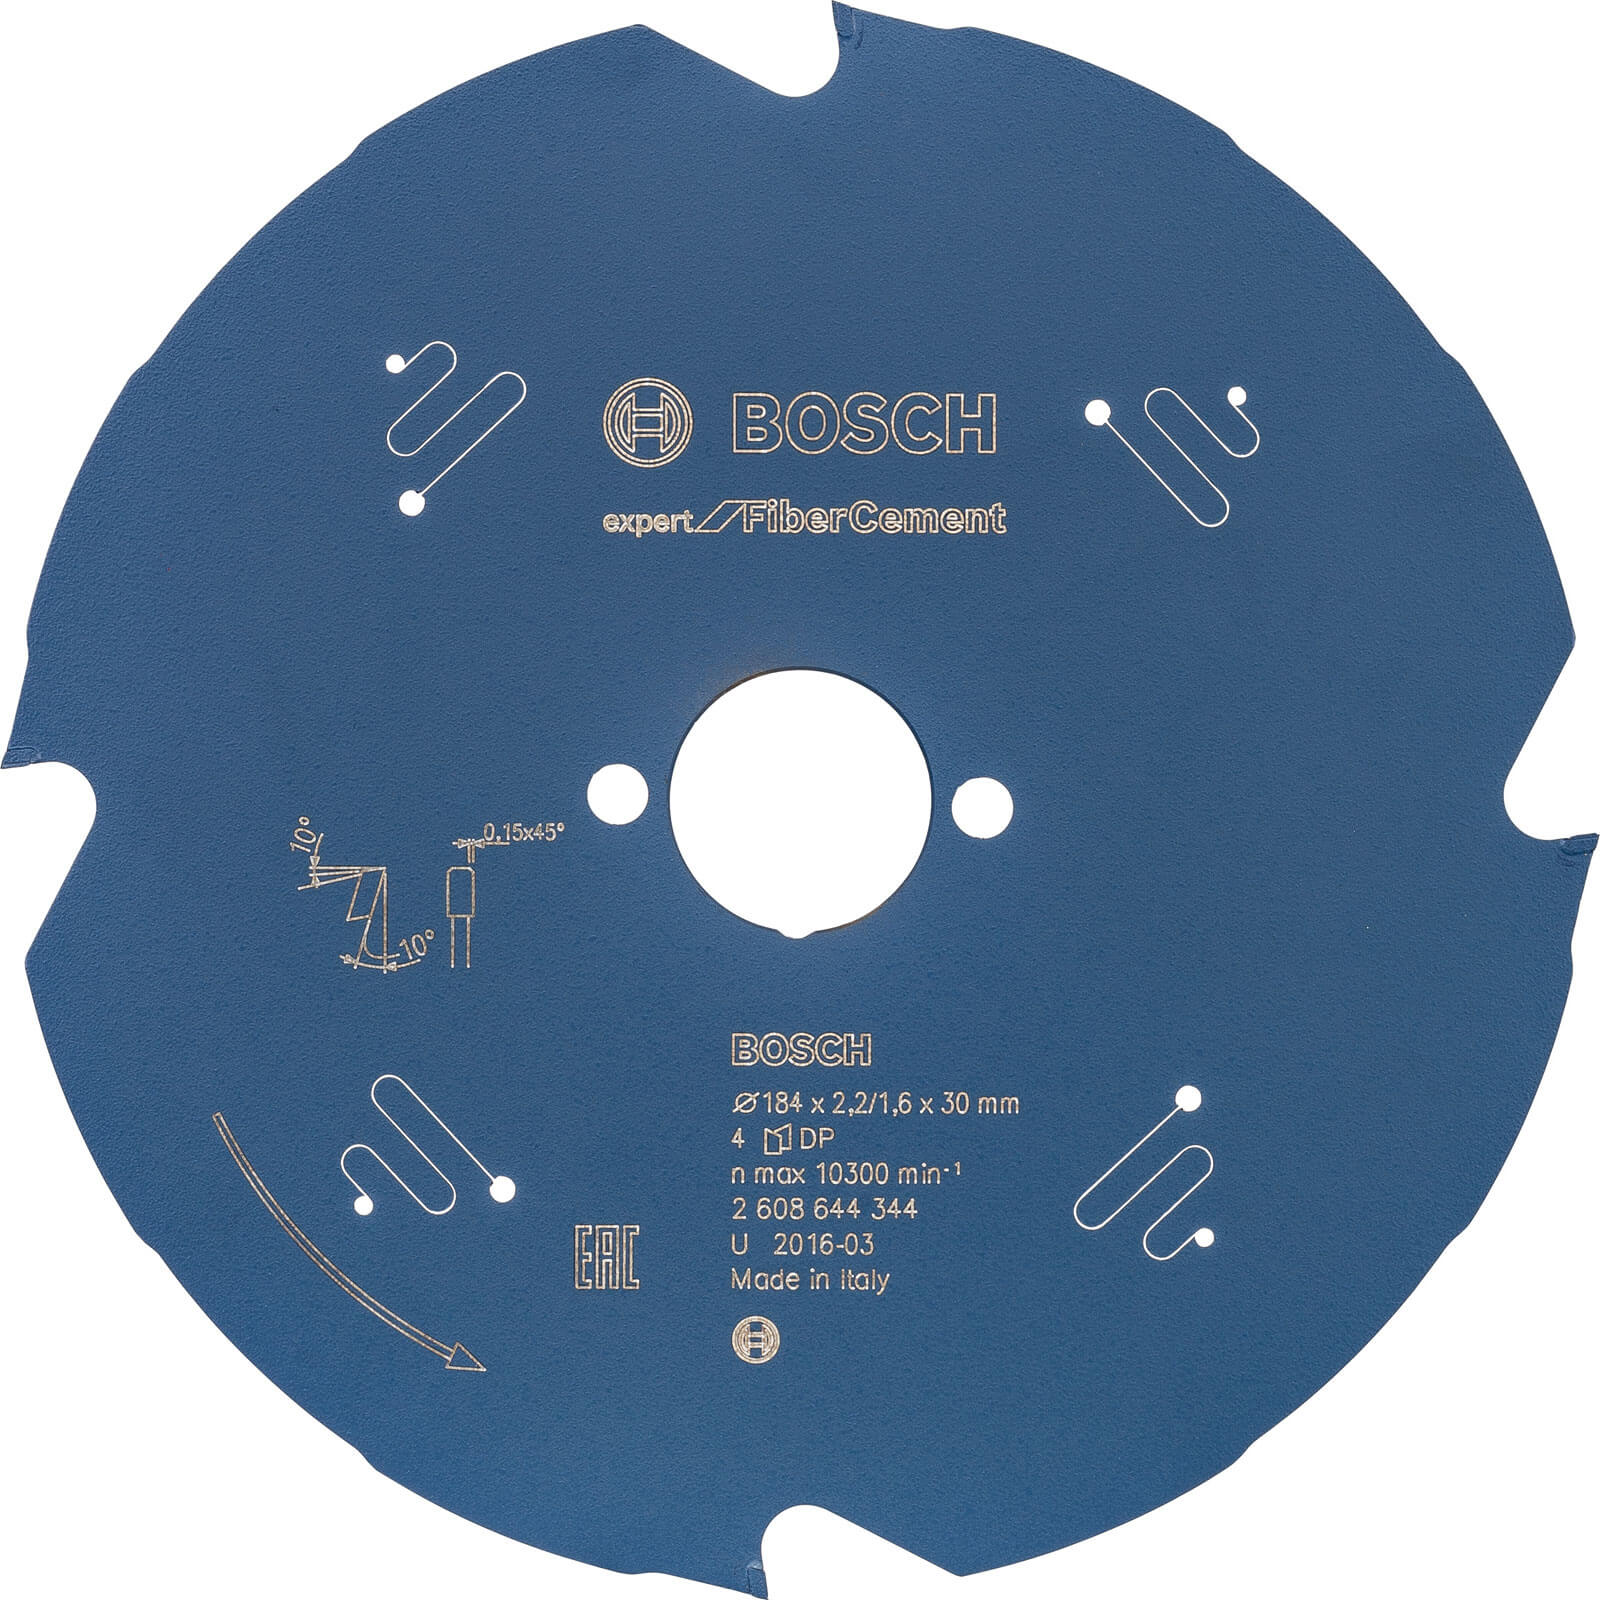 Photo of Bosch Fiber Cement Cutting Saw Blade 184mm 4t 30mm